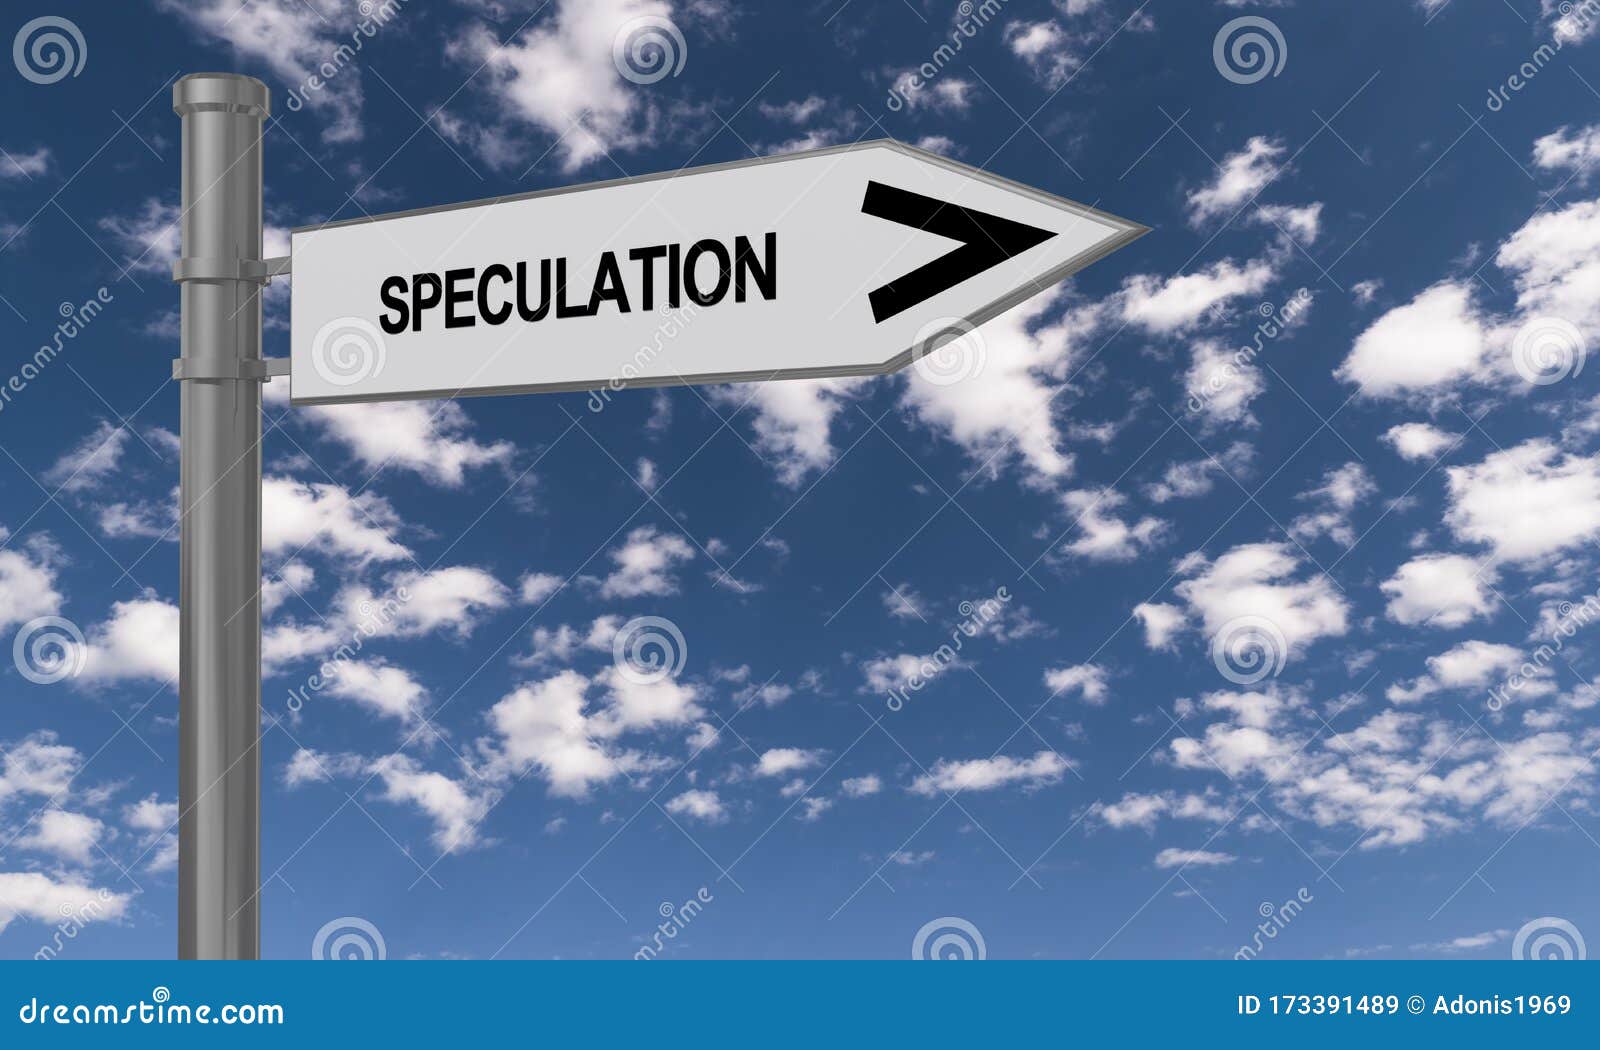 speculation traffic sign